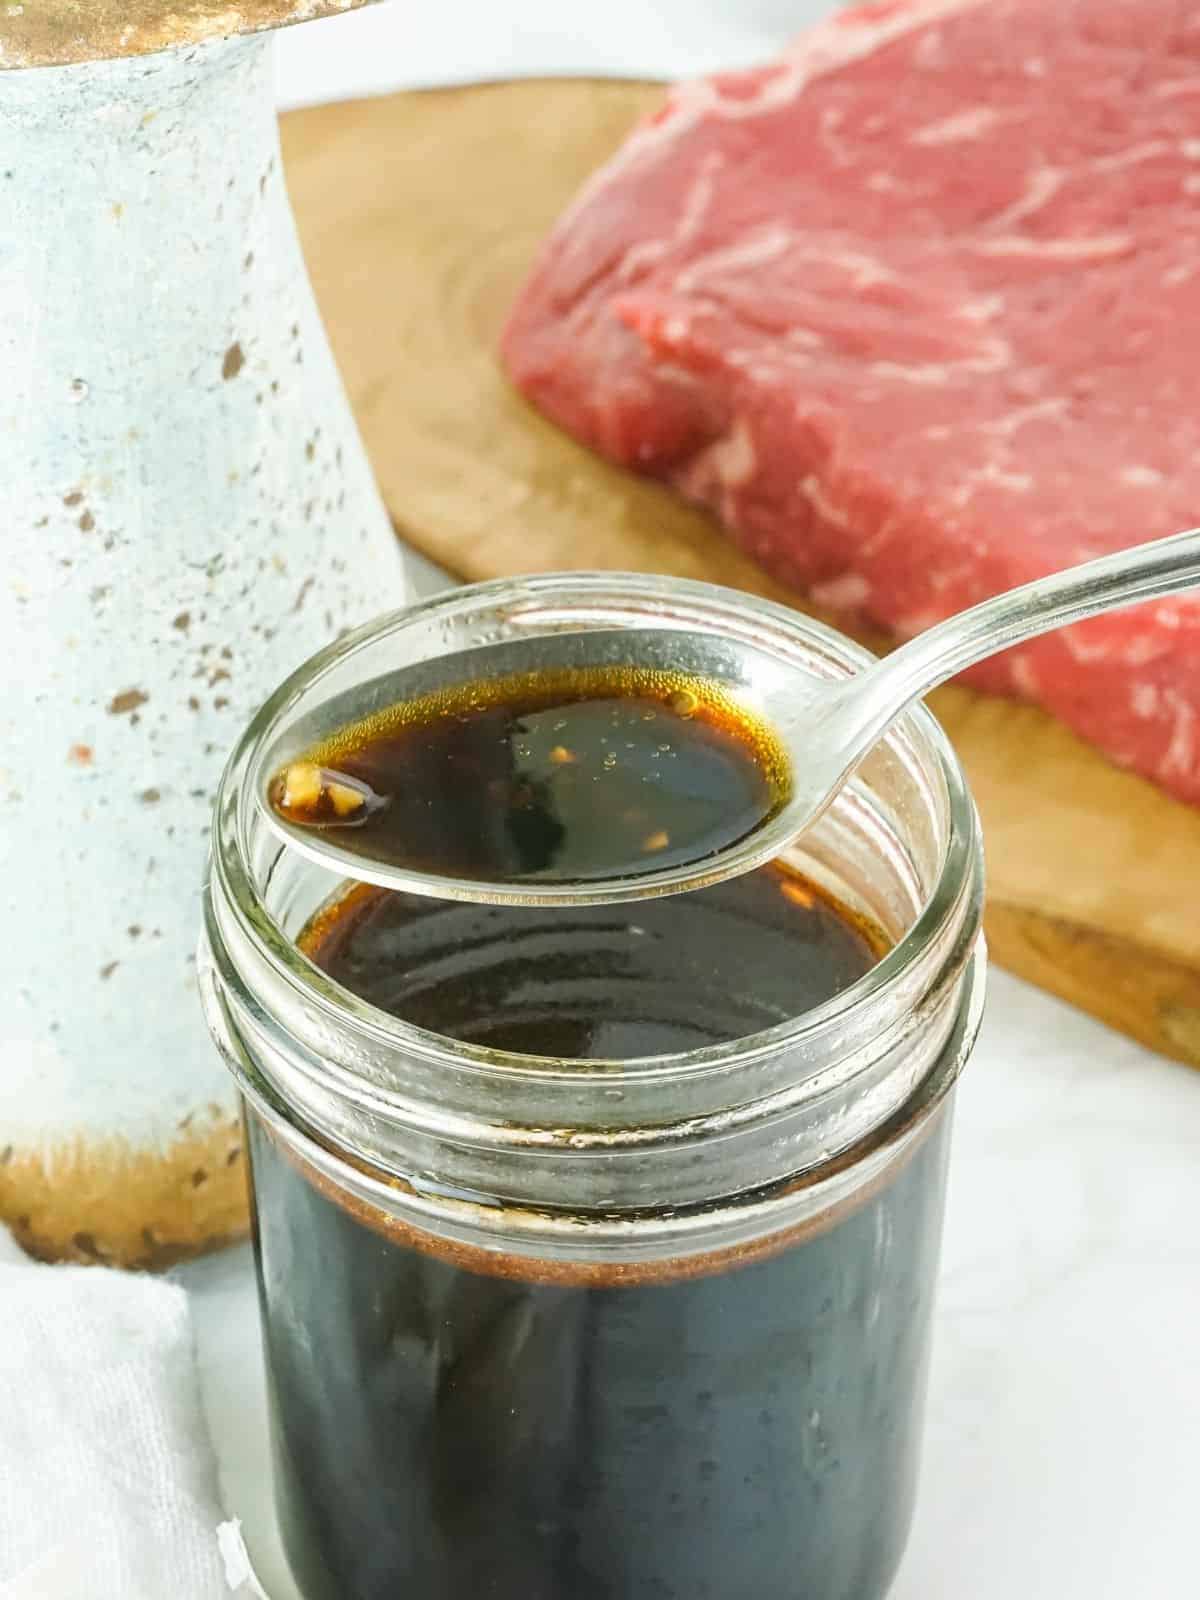 Dark marinade in a glass jar with a silver spoon.